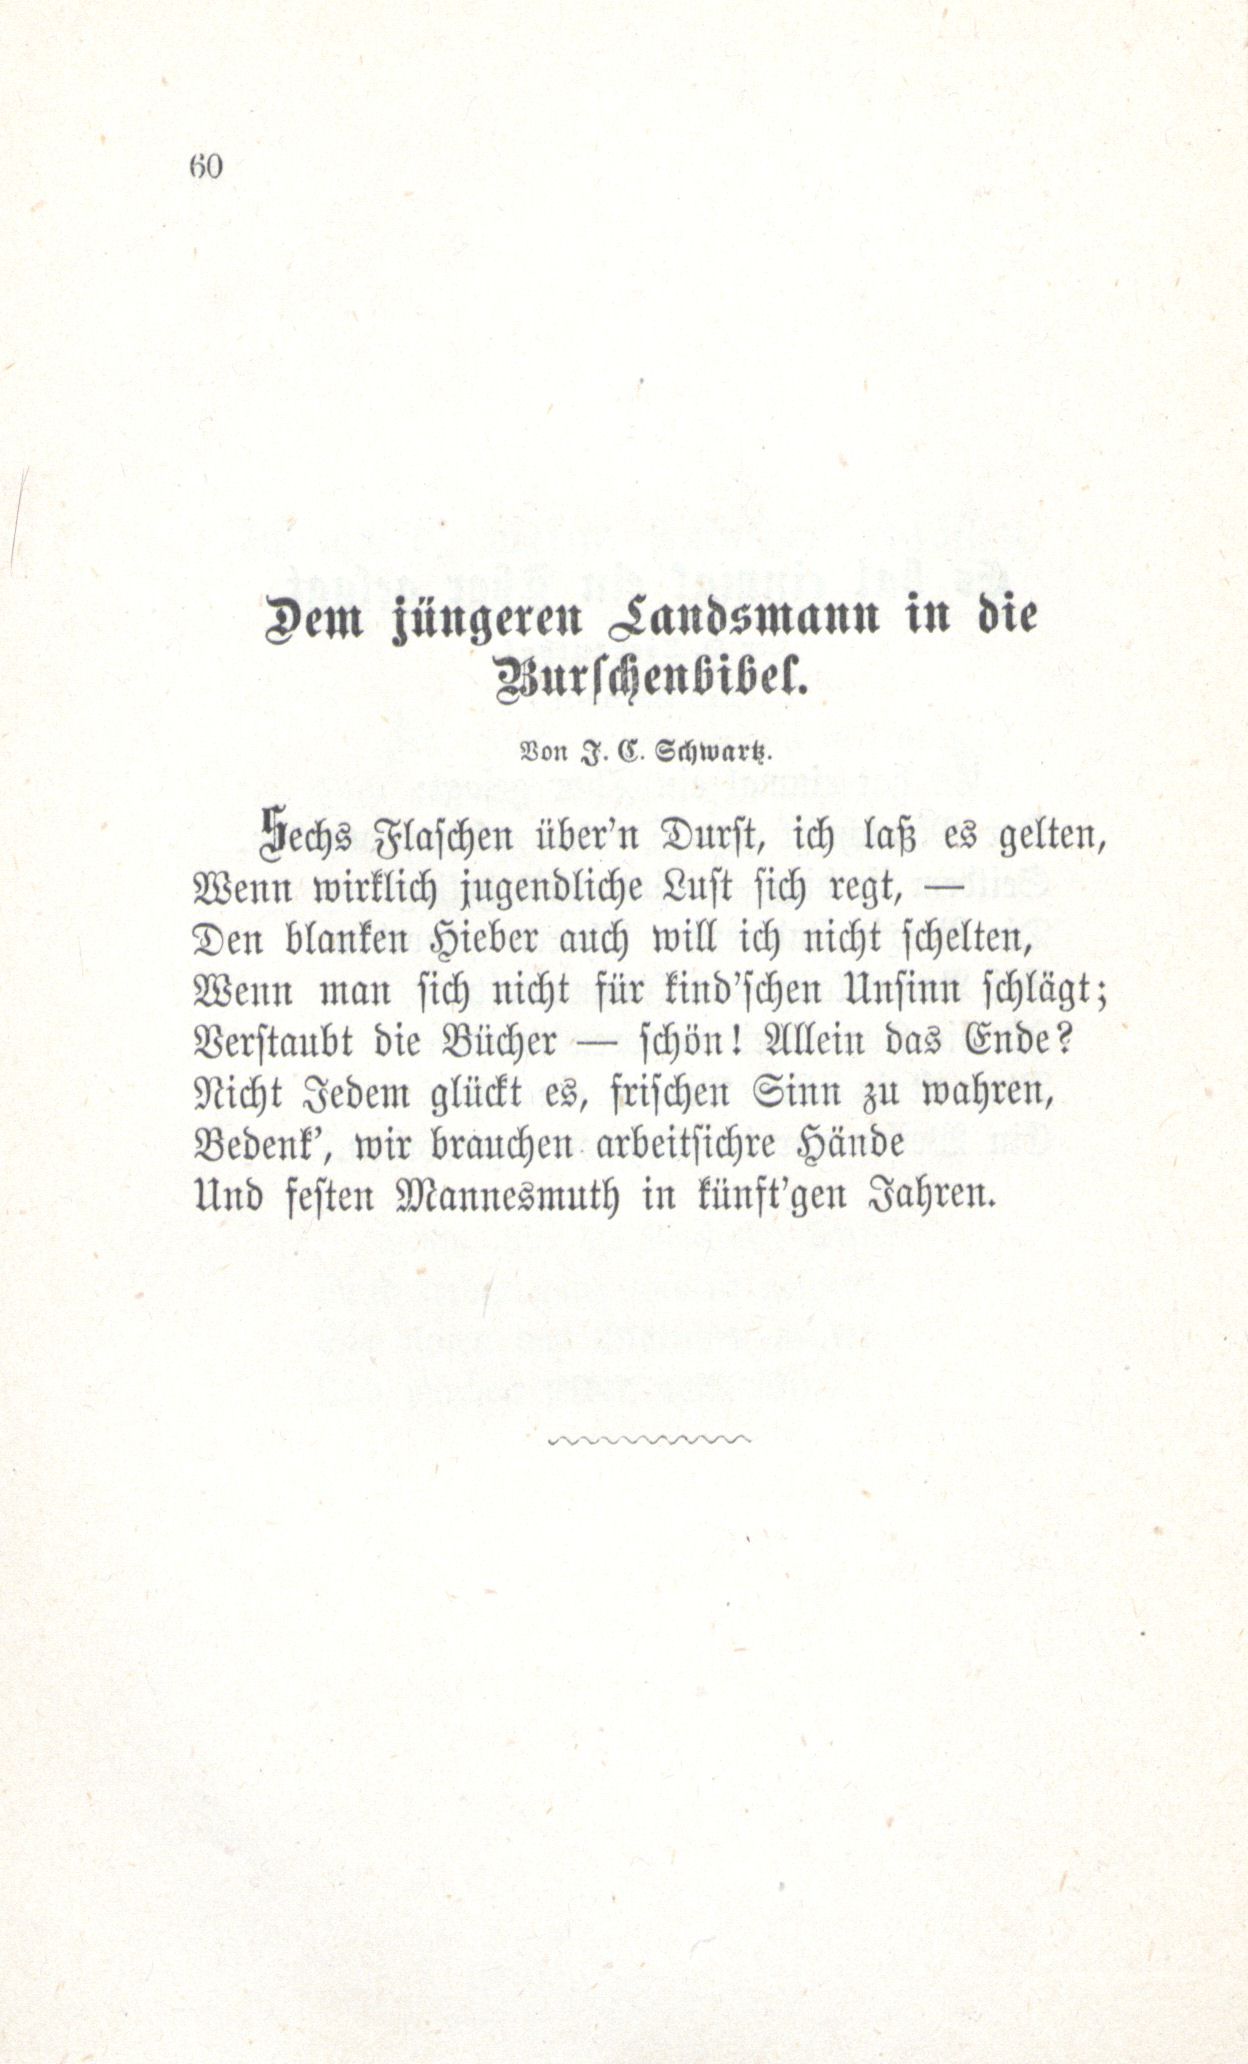 Erinnerung an die Fraternitas (1880) | 61. (60) Основной текст